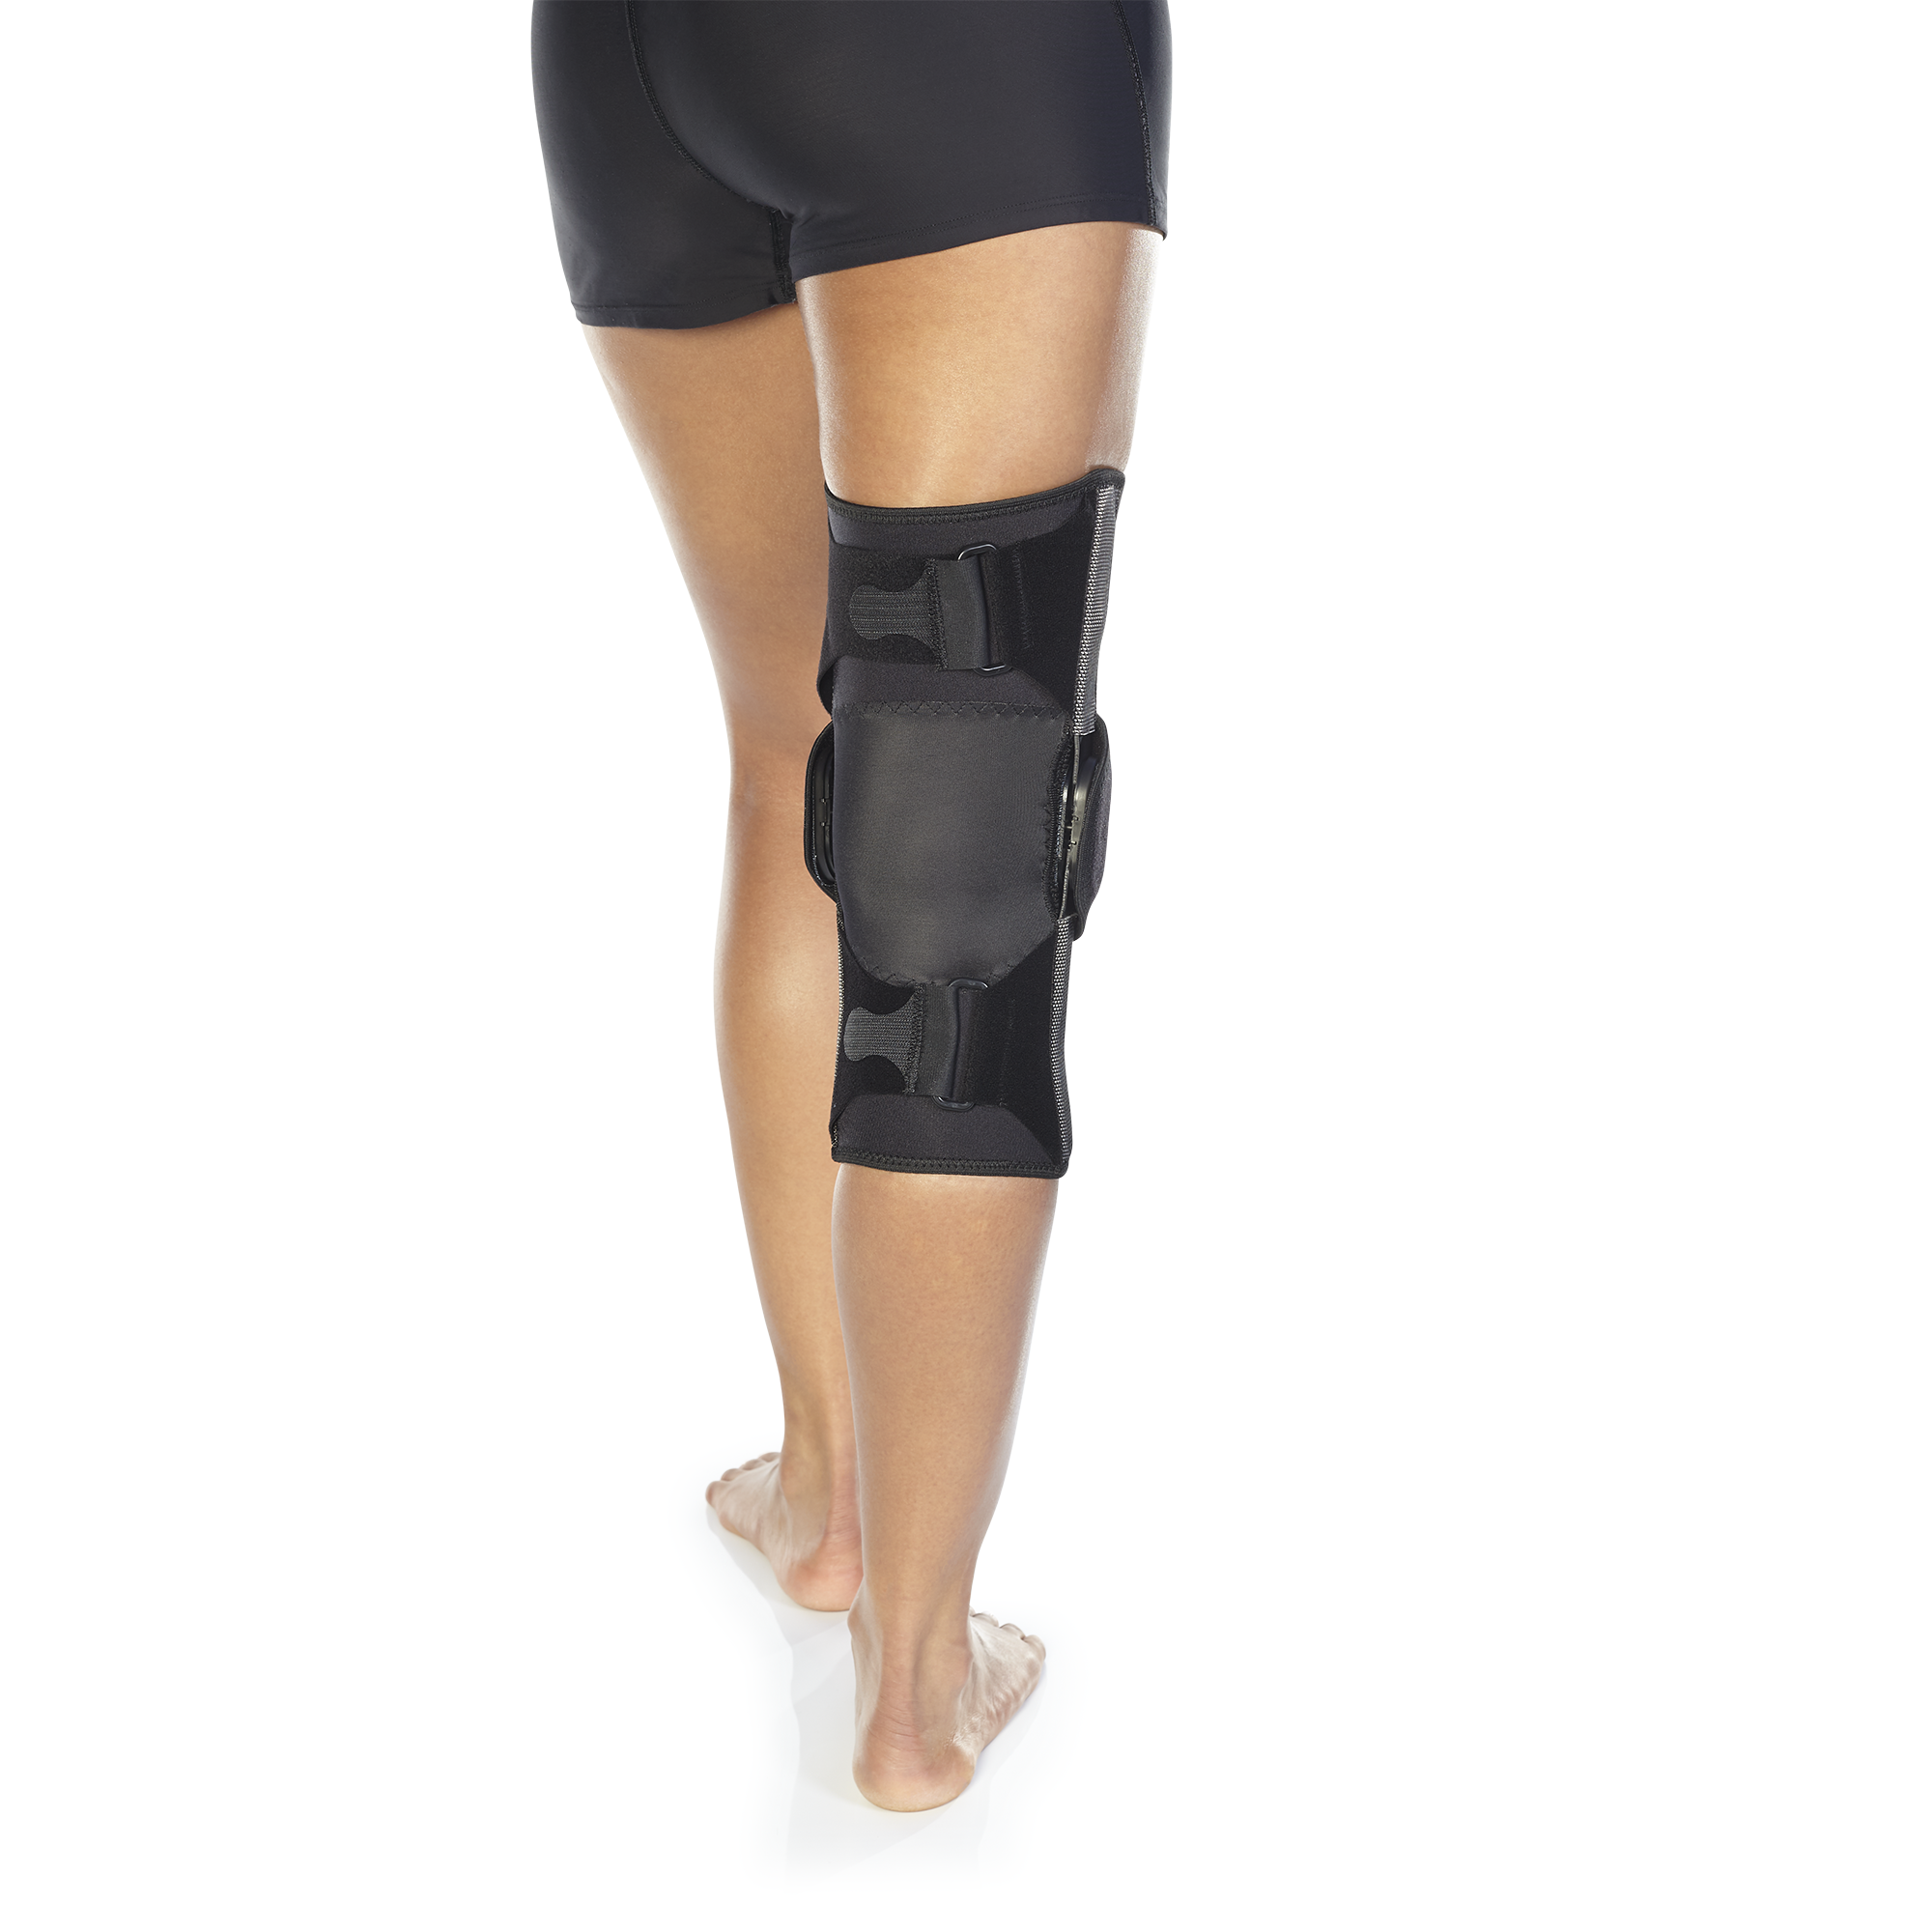 BioSkin Knee Compression Sleeve and Brace